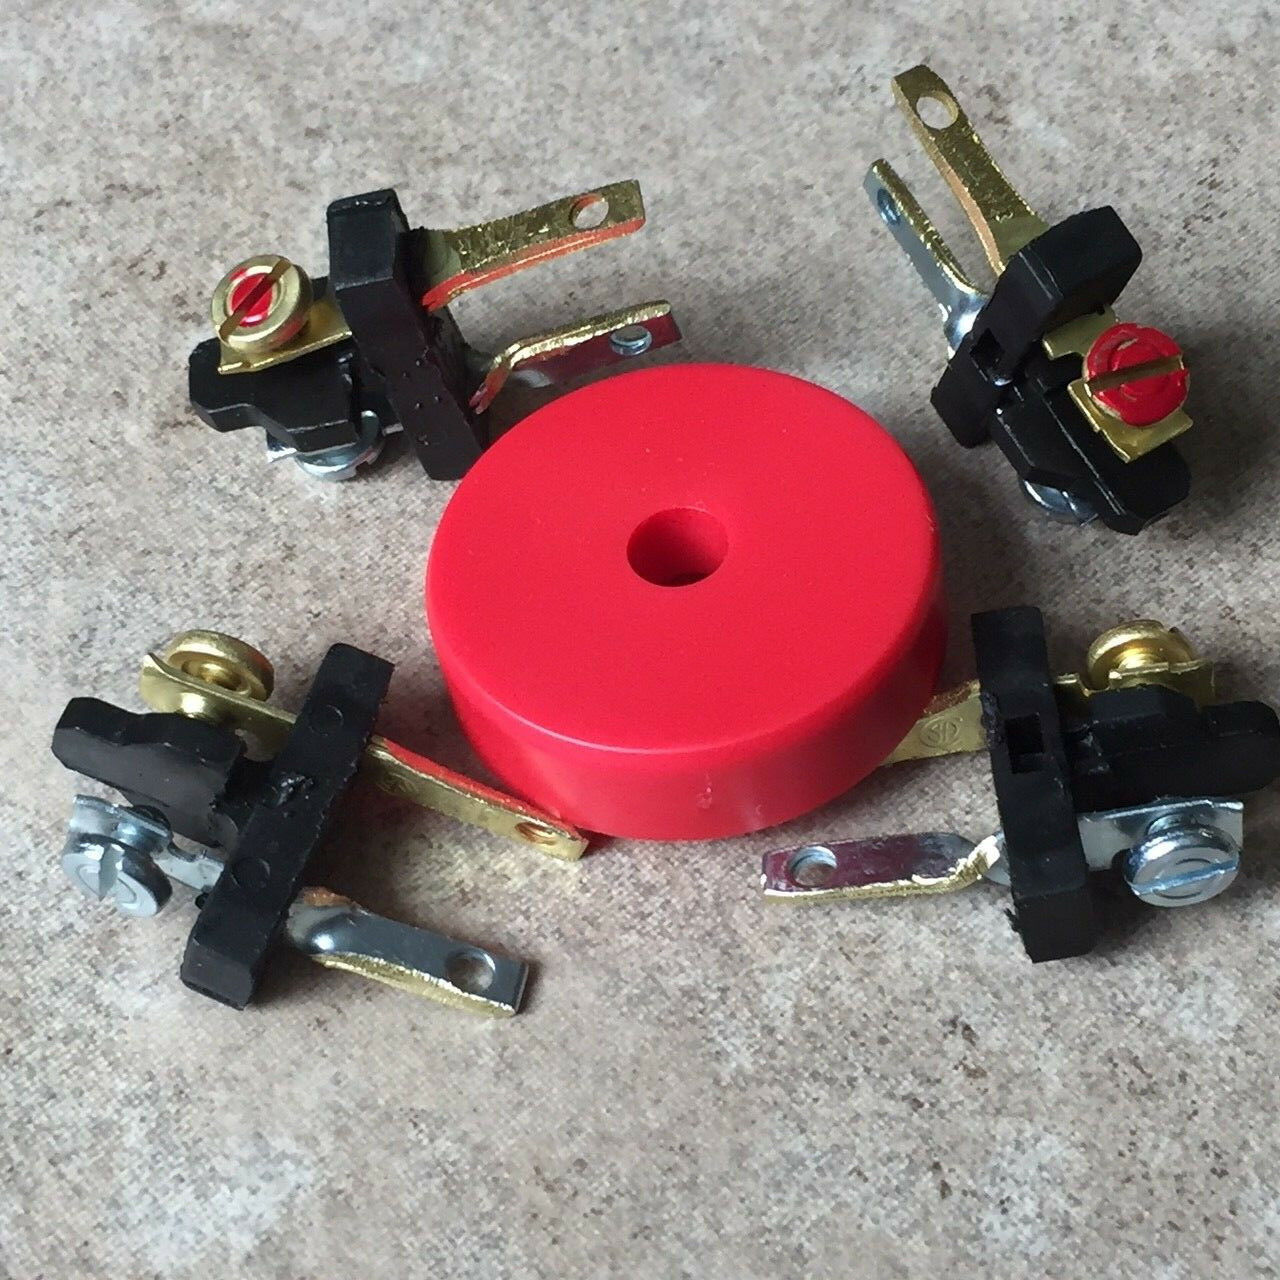 Four (4) Speaker Plugs For Pioneer Sx & Sa Stereos +bonus Red Turntable Adapter